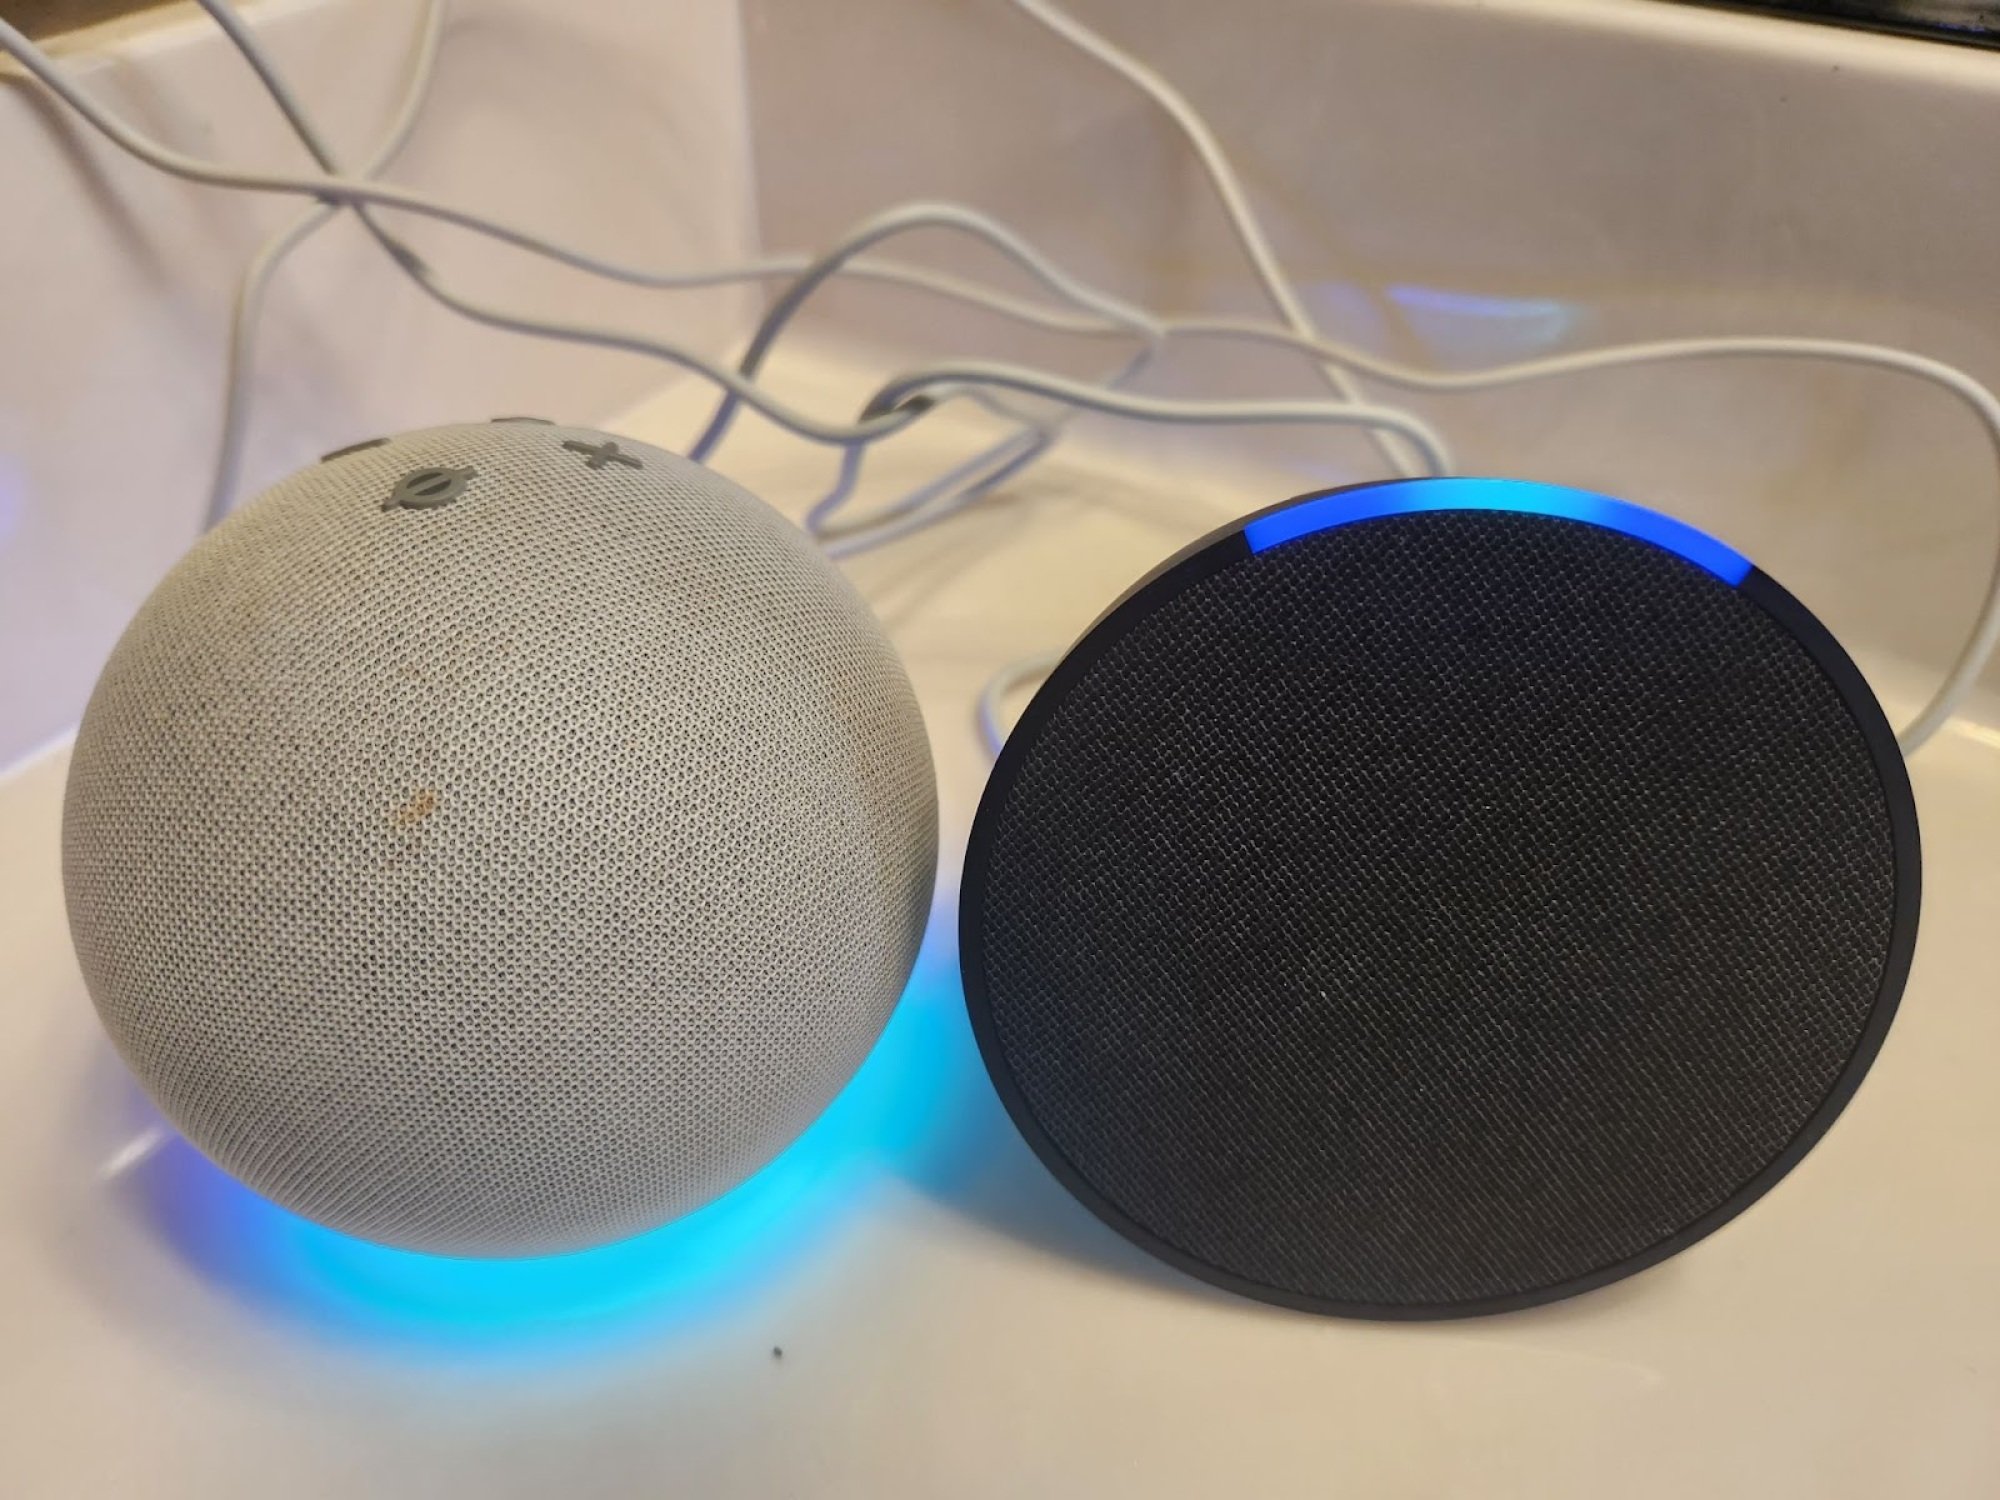 round, gray echo dot speaker next to flat, circular echo pop speaker. both are similar in size